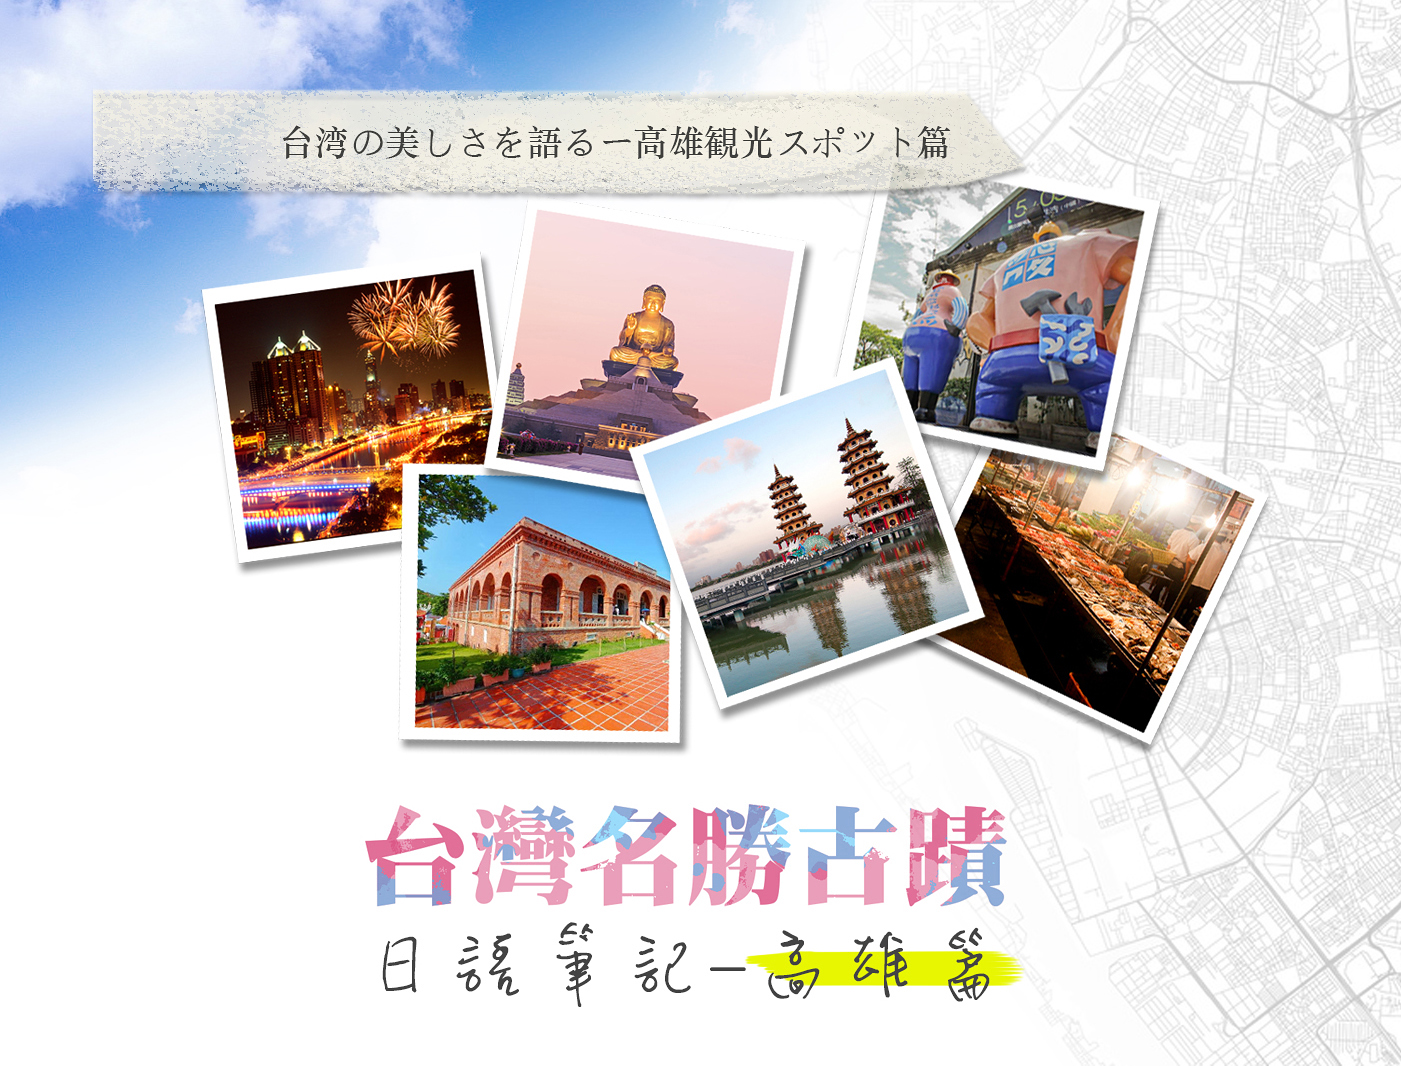 <span lang="zh_tw" class="multilang">台灣名勝古蹟日語筆記-高雄篇</span><span lang="en" class="multilang">Taiwan's scenic spenic spots - Japanese notes in Kaohsiung</span>